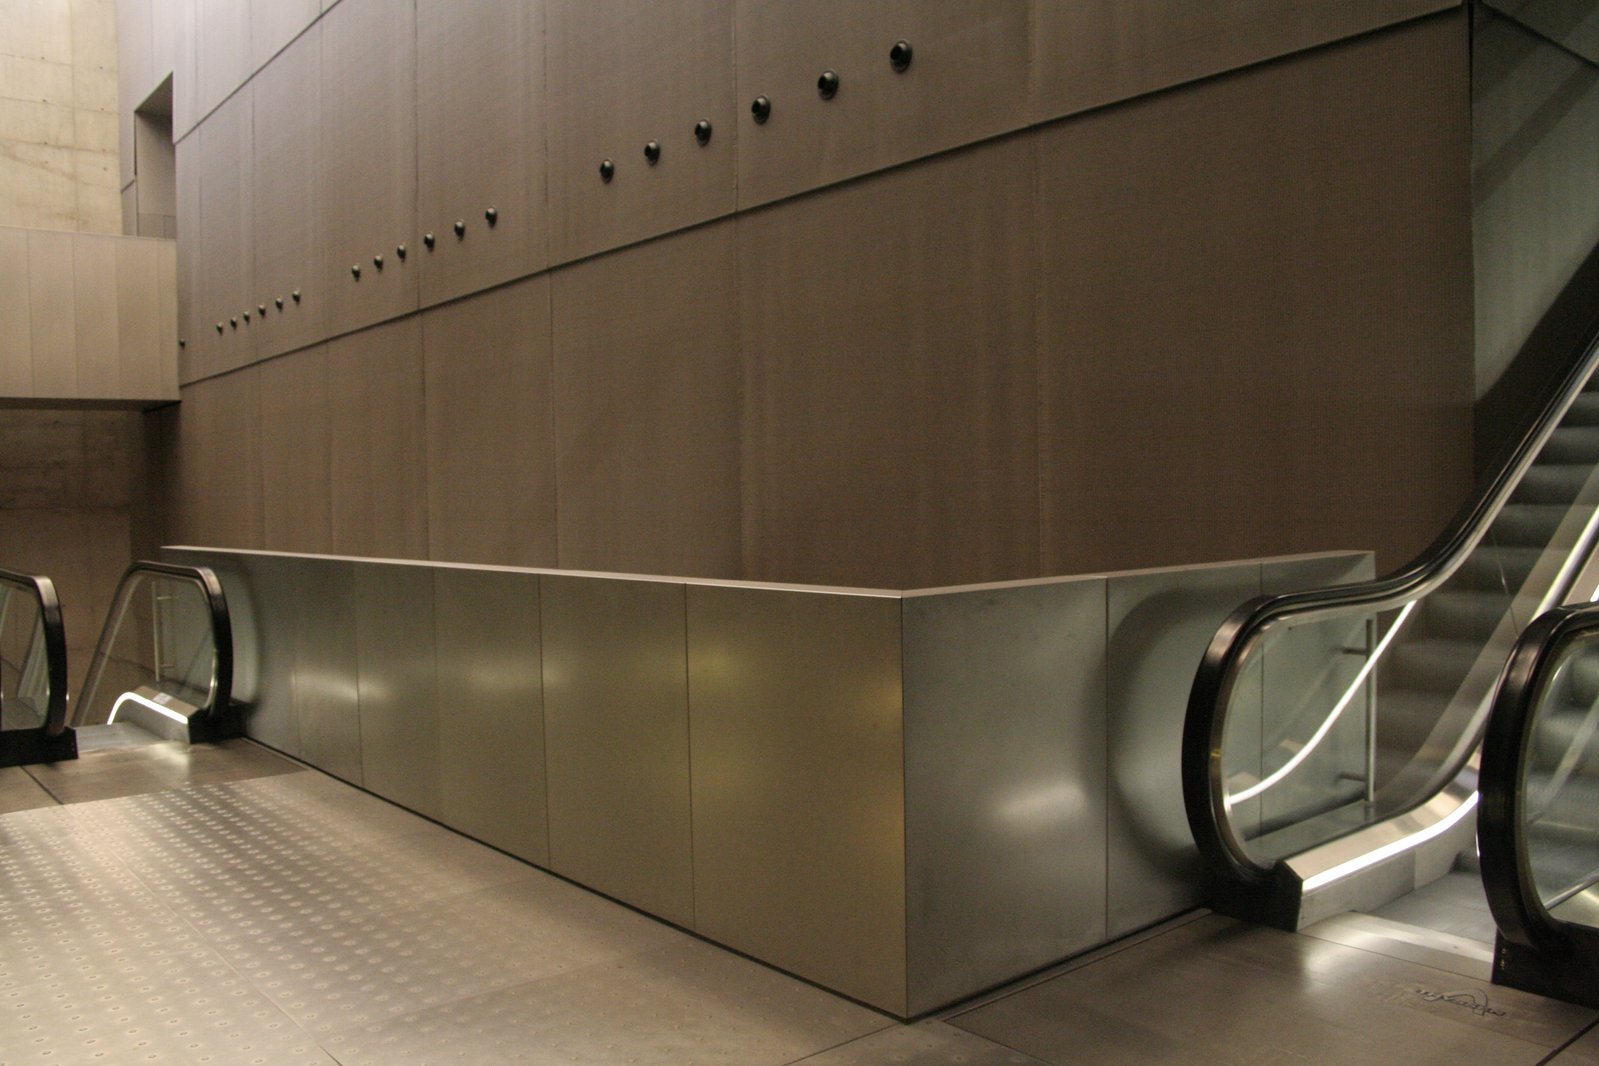 three escalators are seen in this indoor area